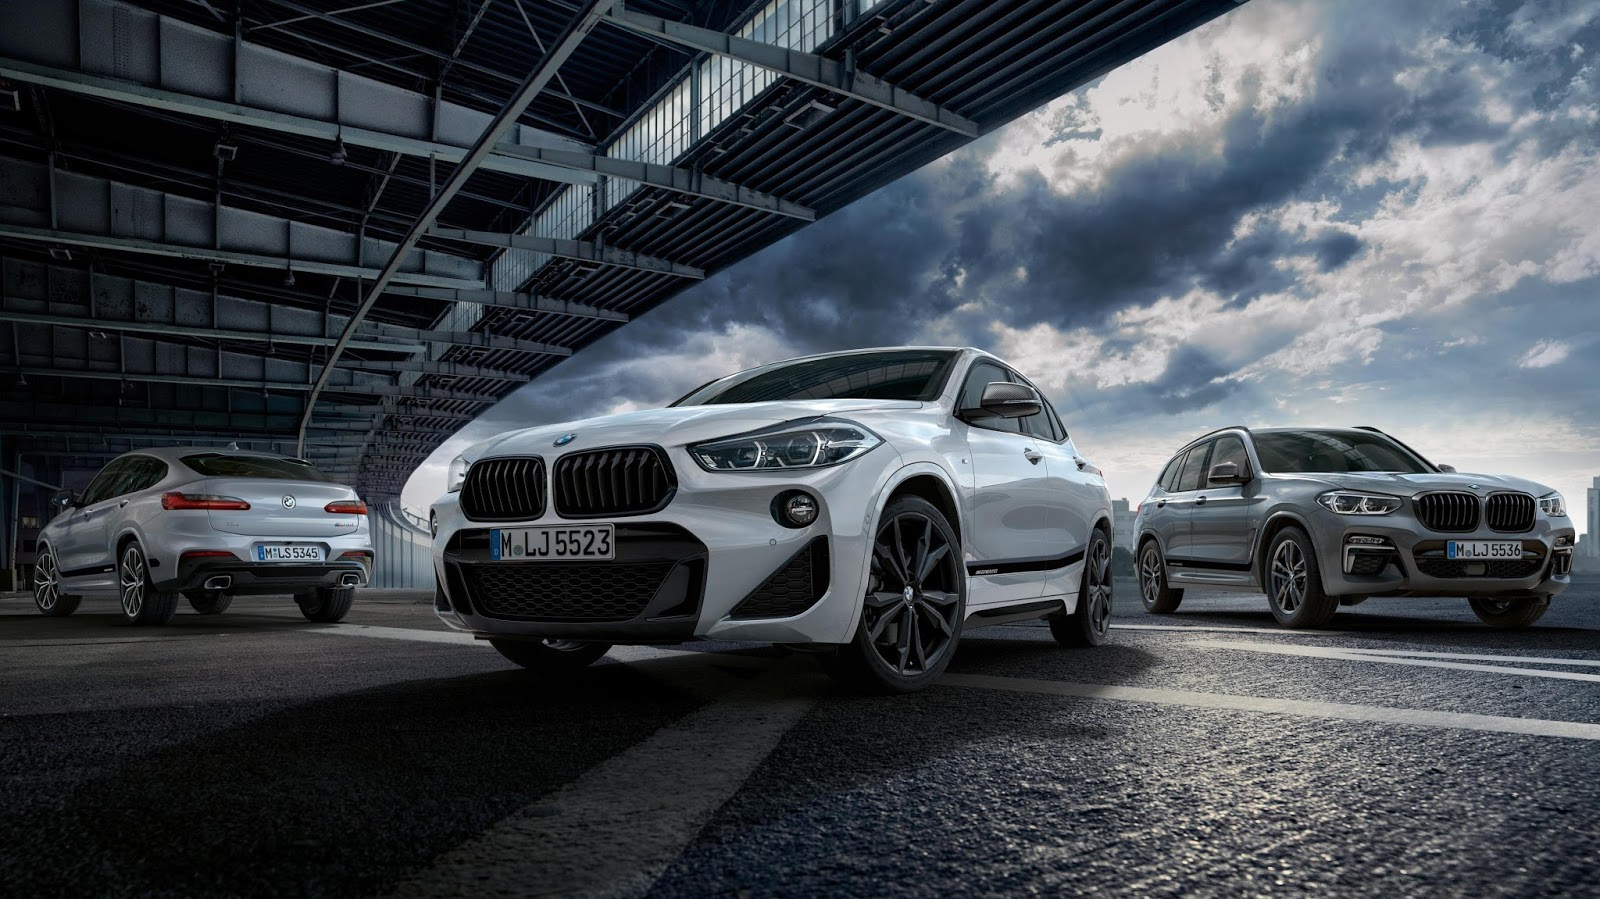 Accesorios M Performance de BMW